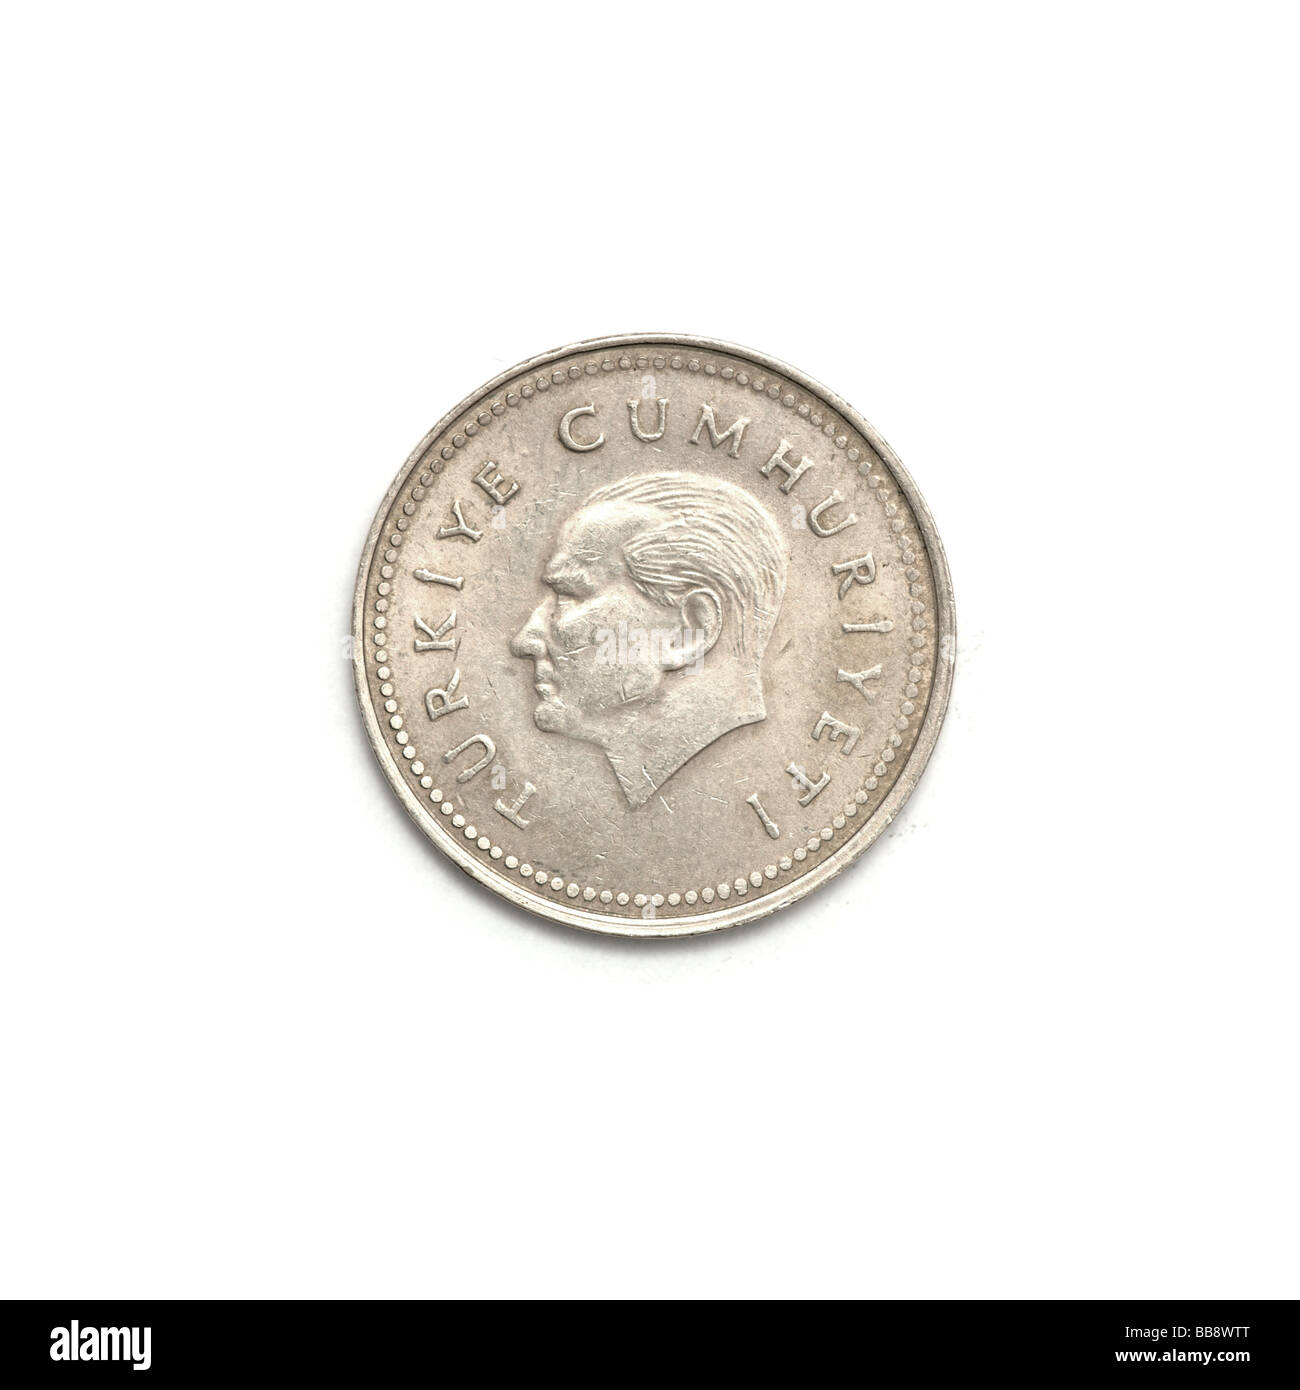 Turkish 5000 lira coin Stock Photo